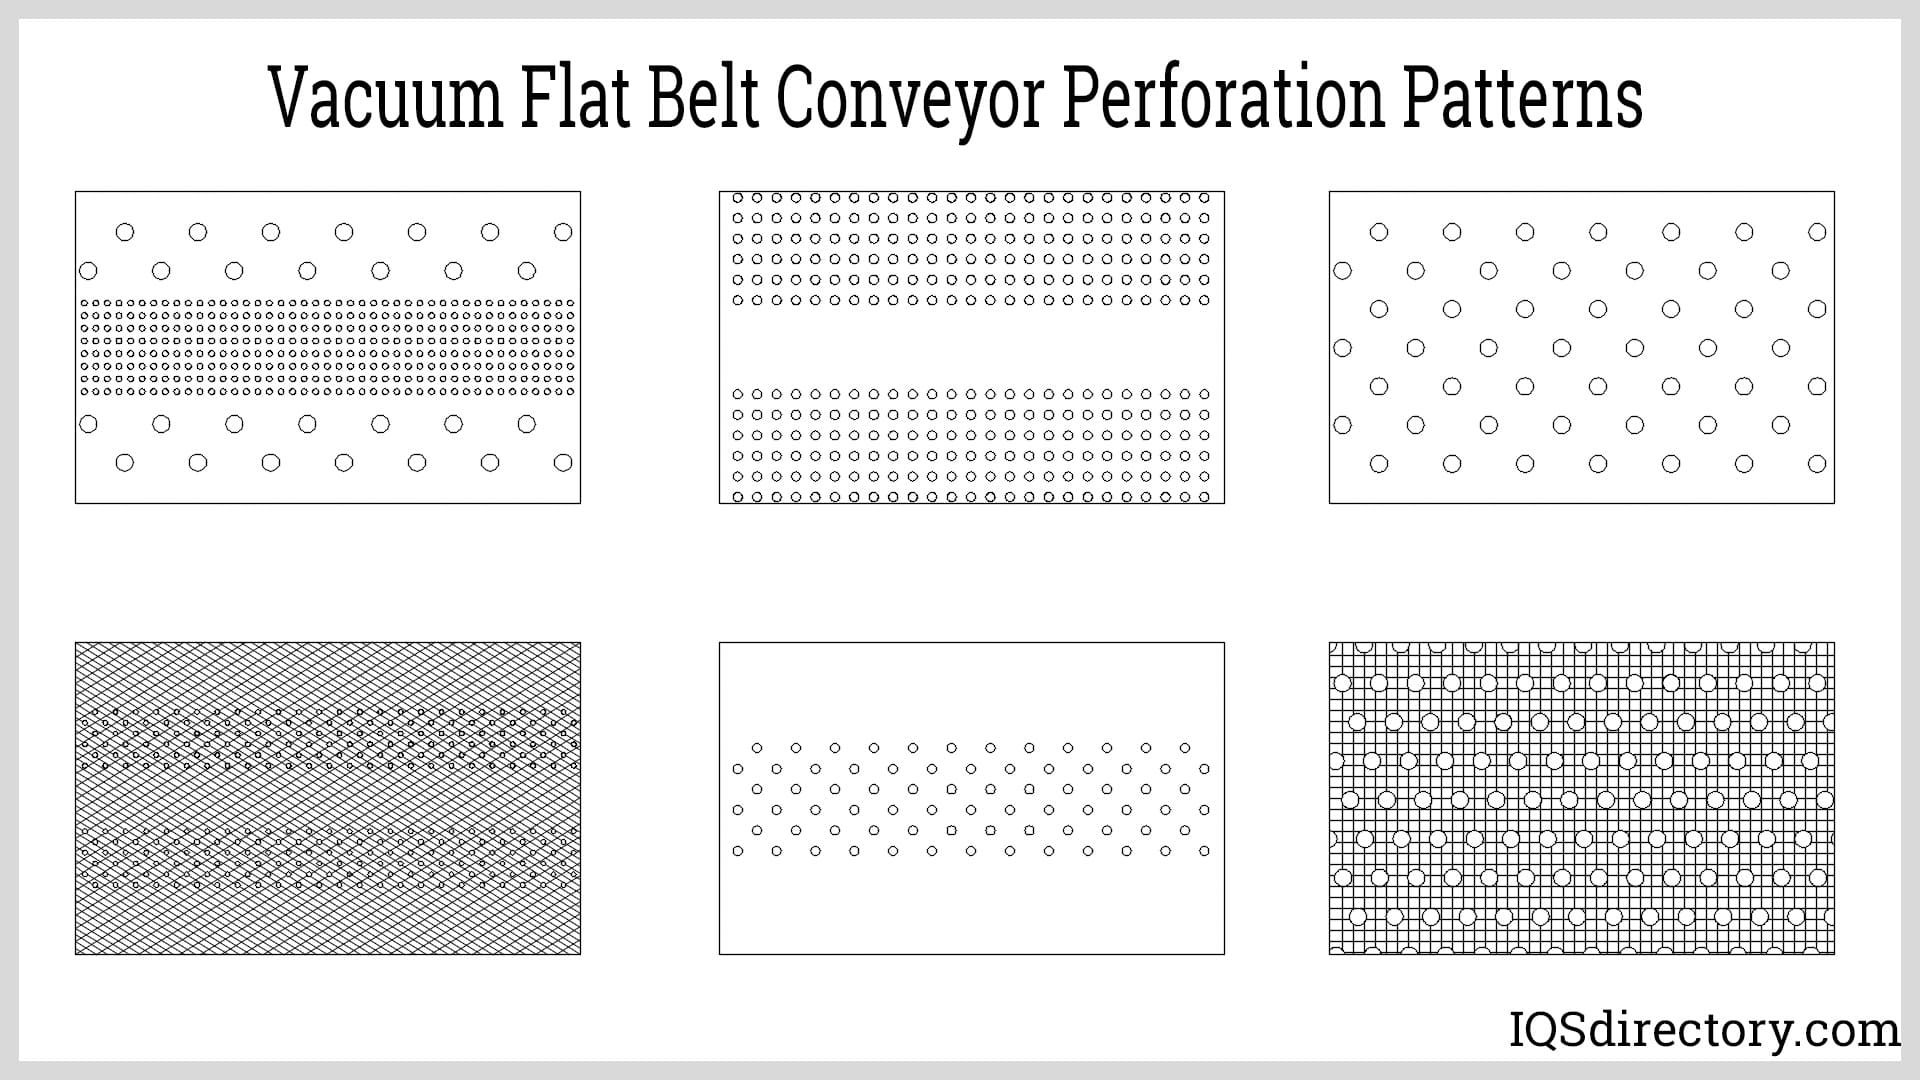 Vacuum Flat Belt Conveyor Perforation Patterns